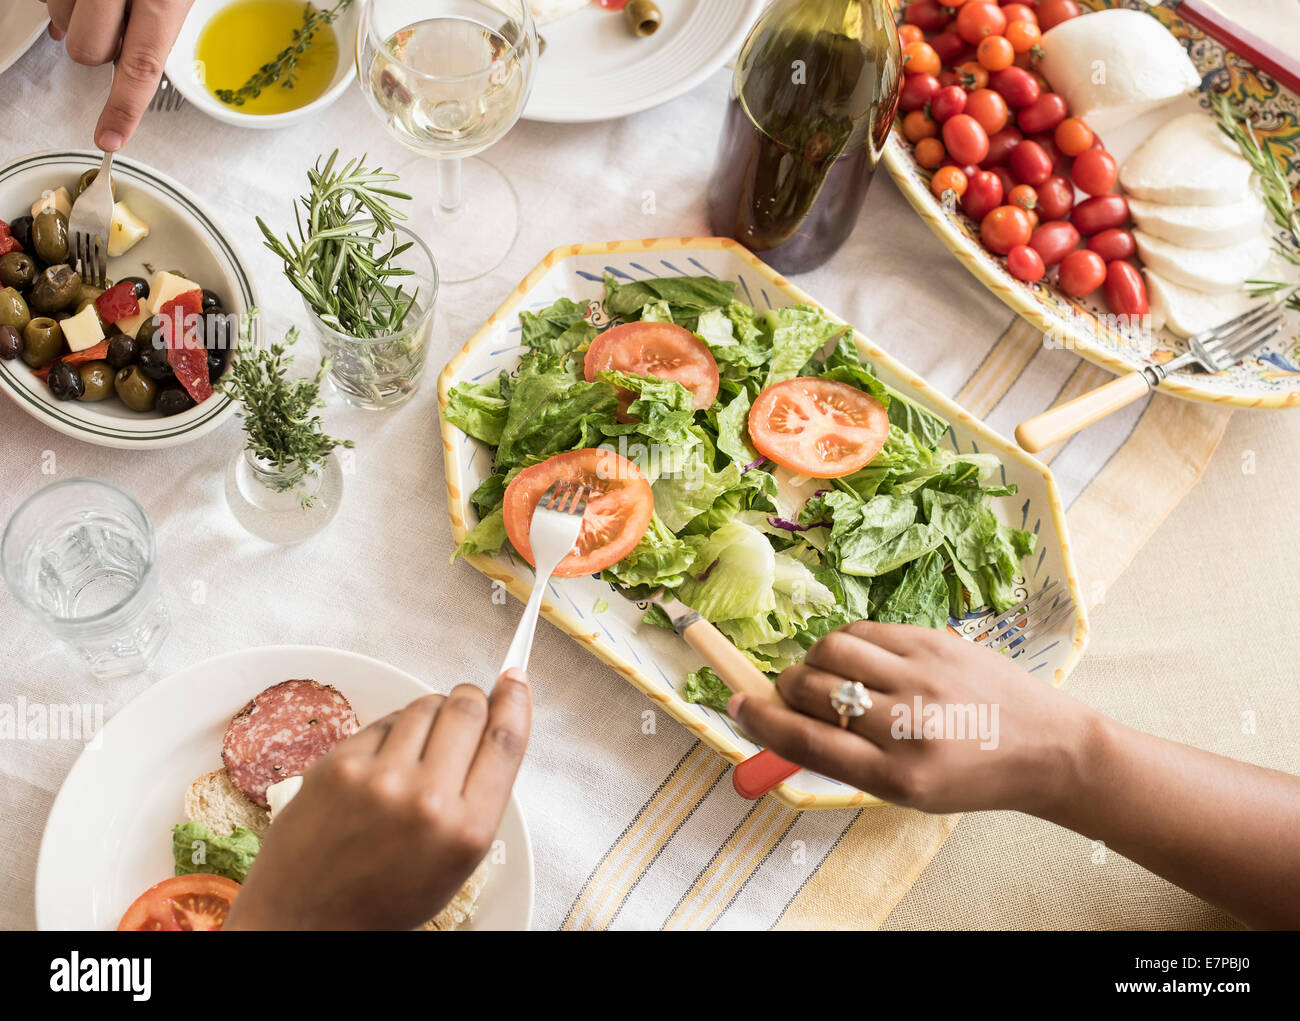 Hands serving salad Stock Photo